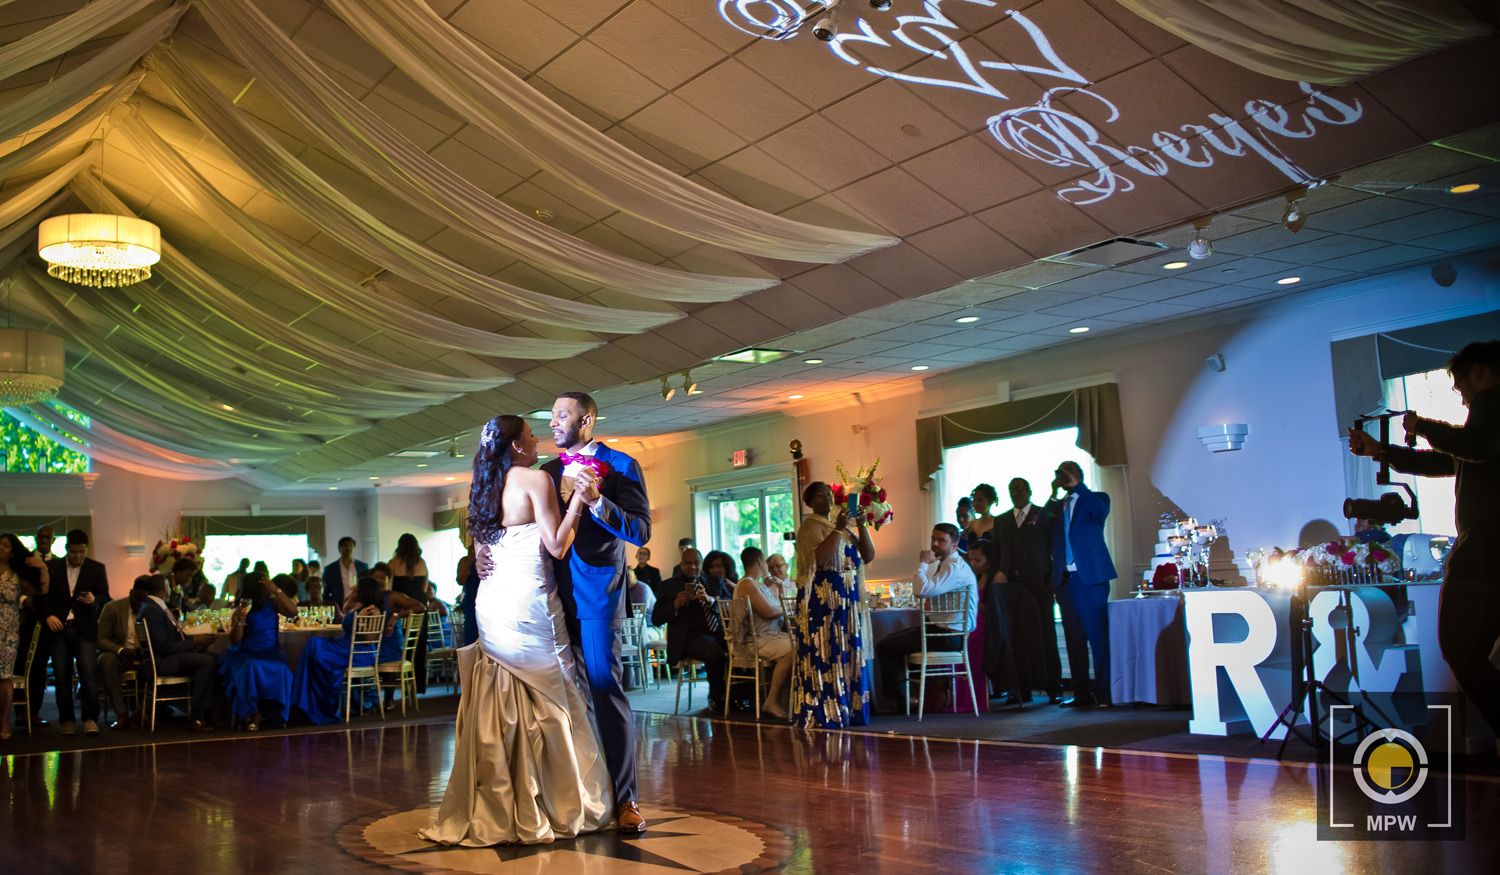 Photo: Wedding Reception Long Island Venue